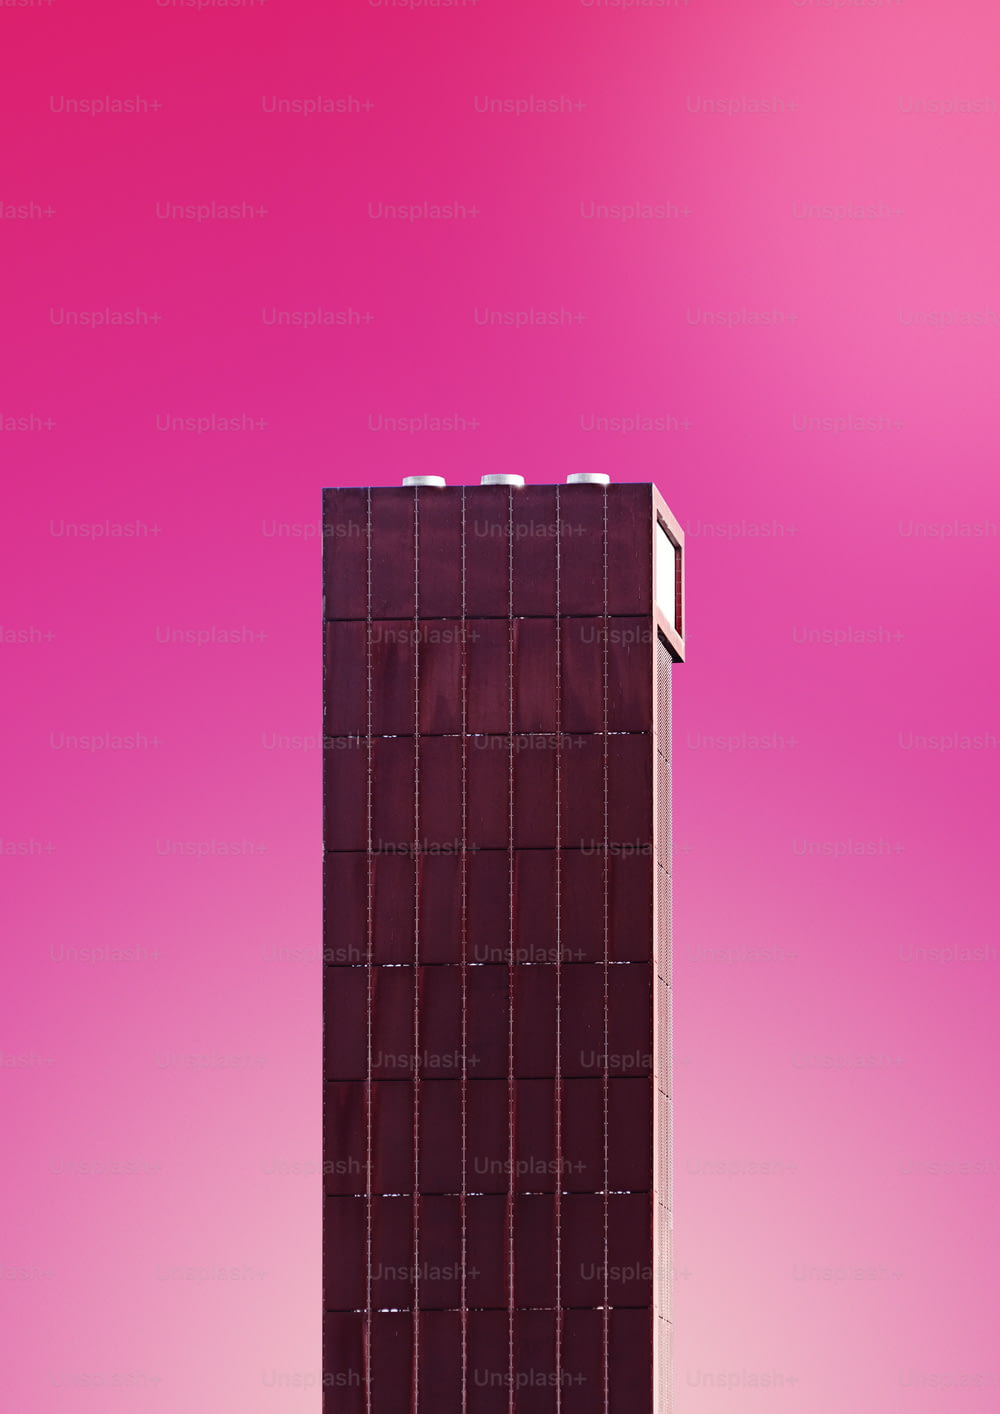 Un edificio alto de color marrón con un fondo rosa